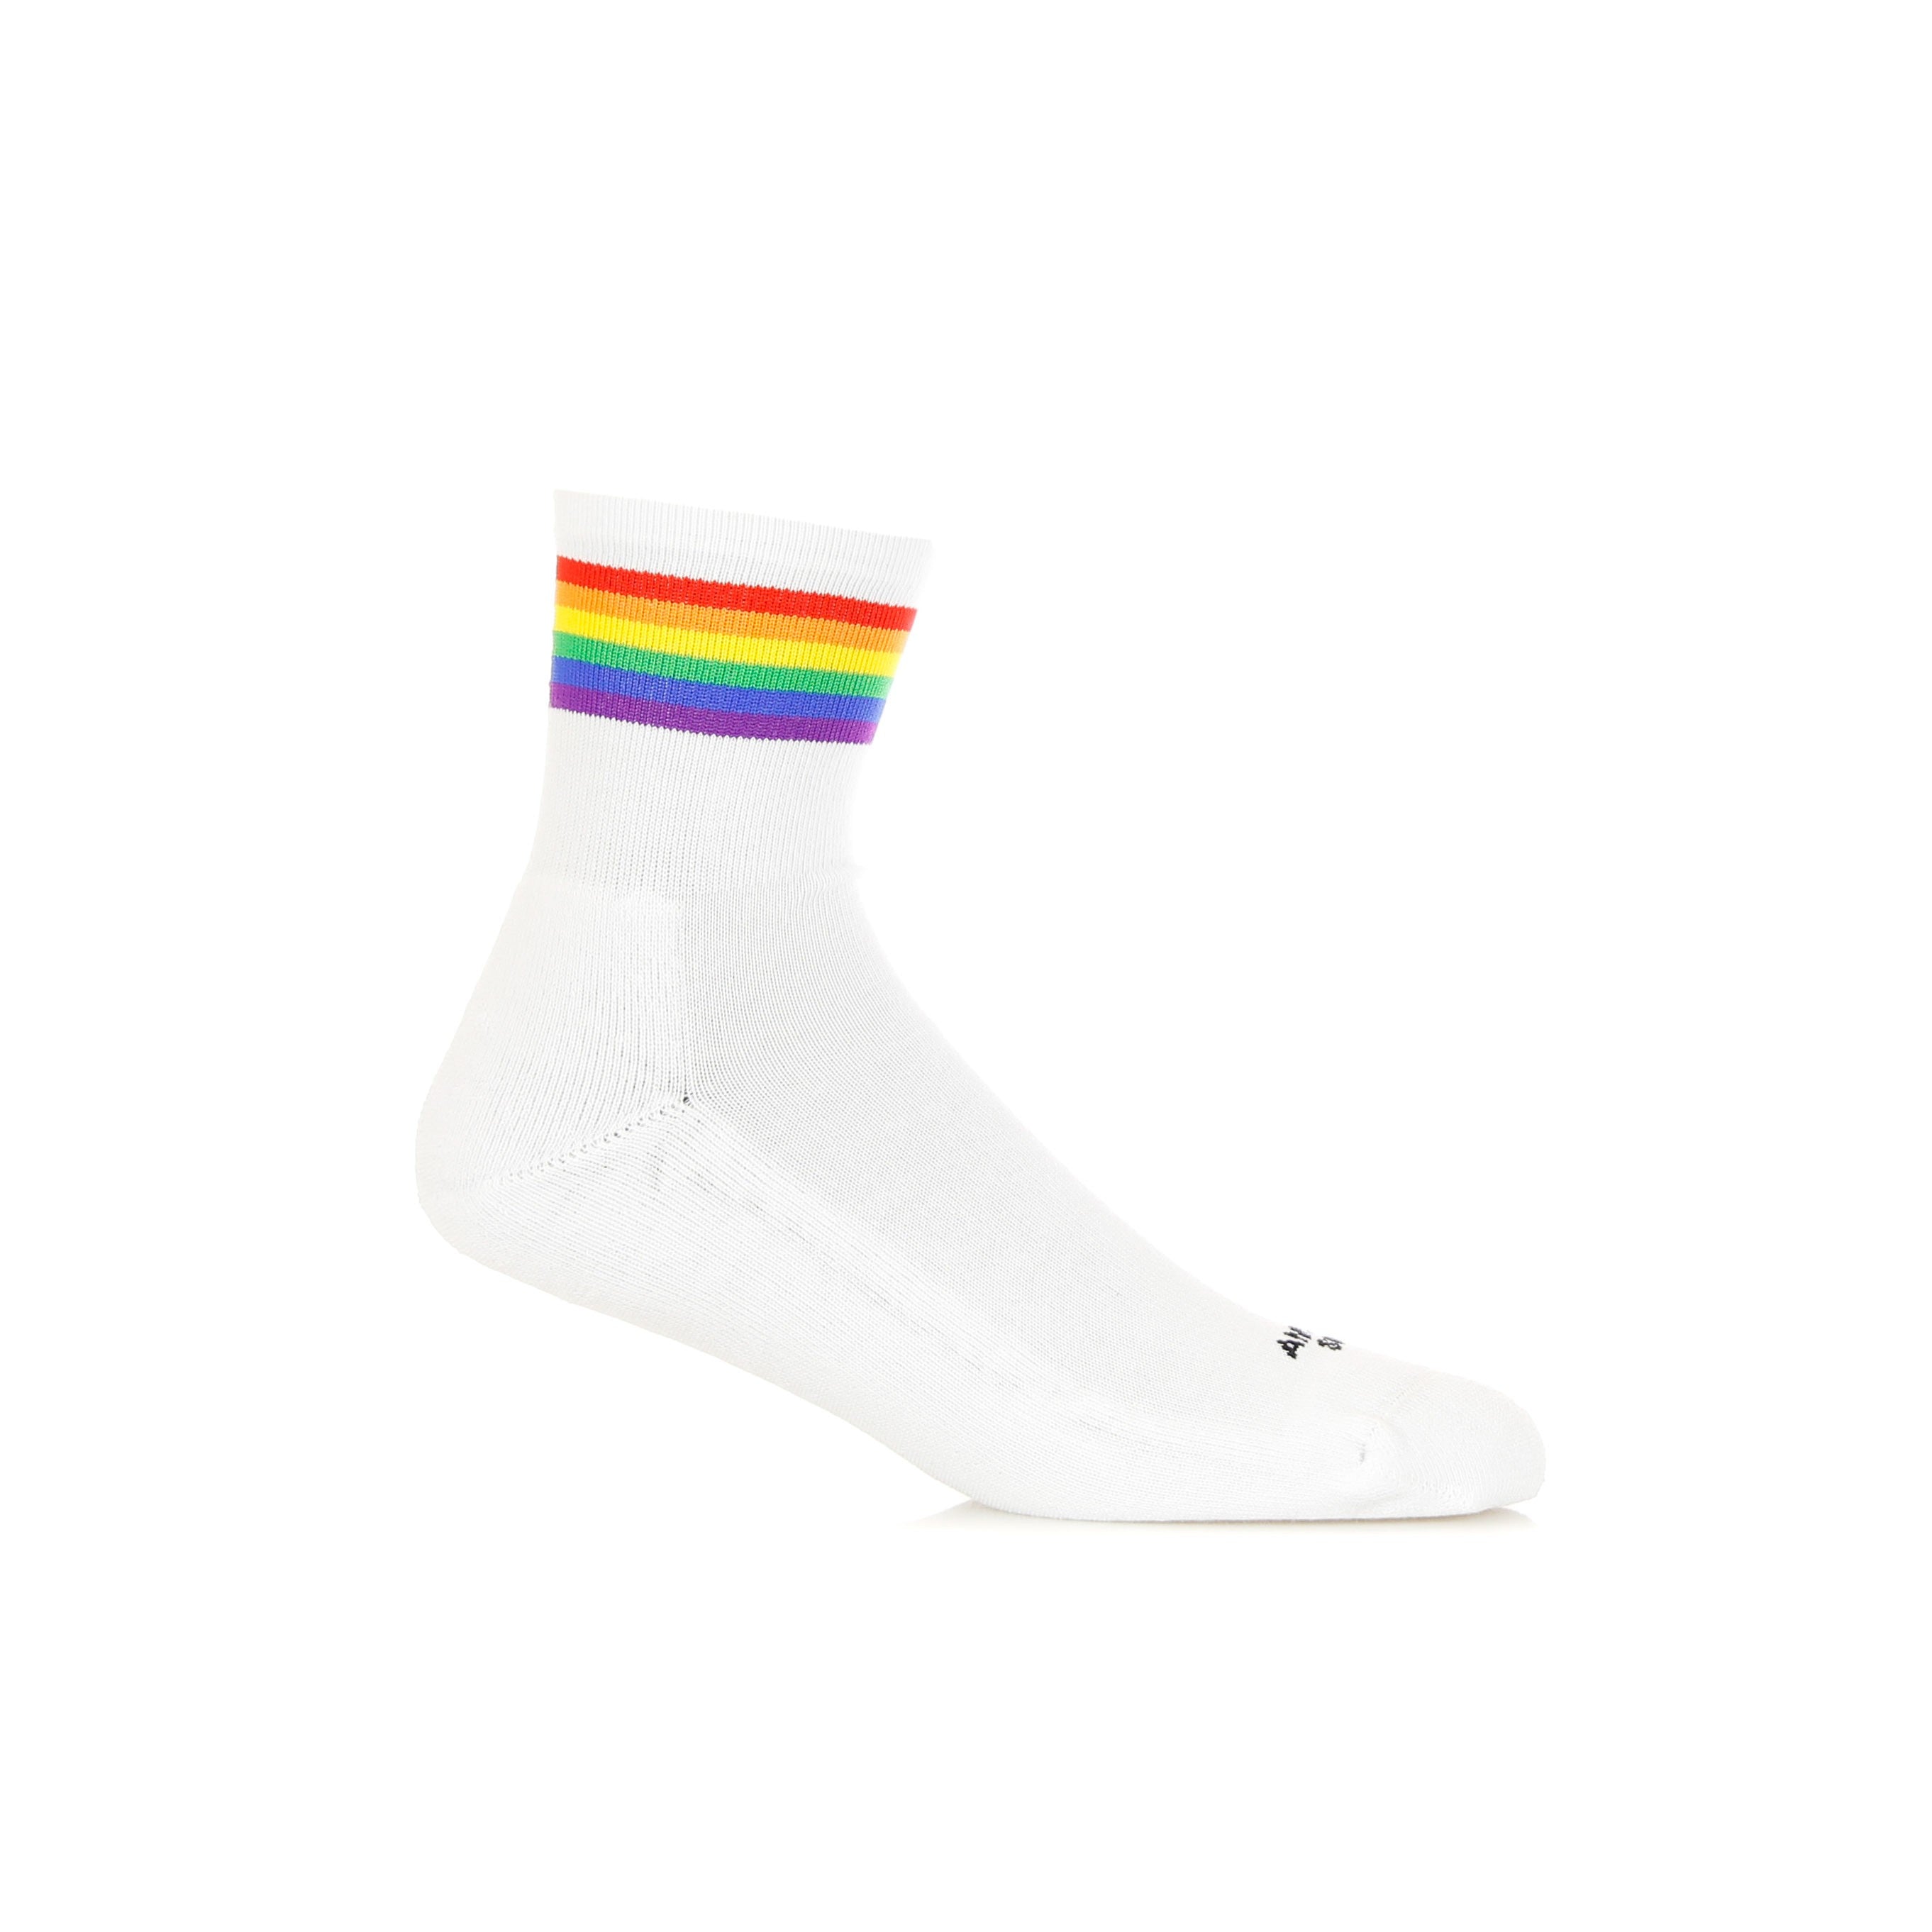 American Socks, Calza Bassa Uomo Rainbow Pride, White